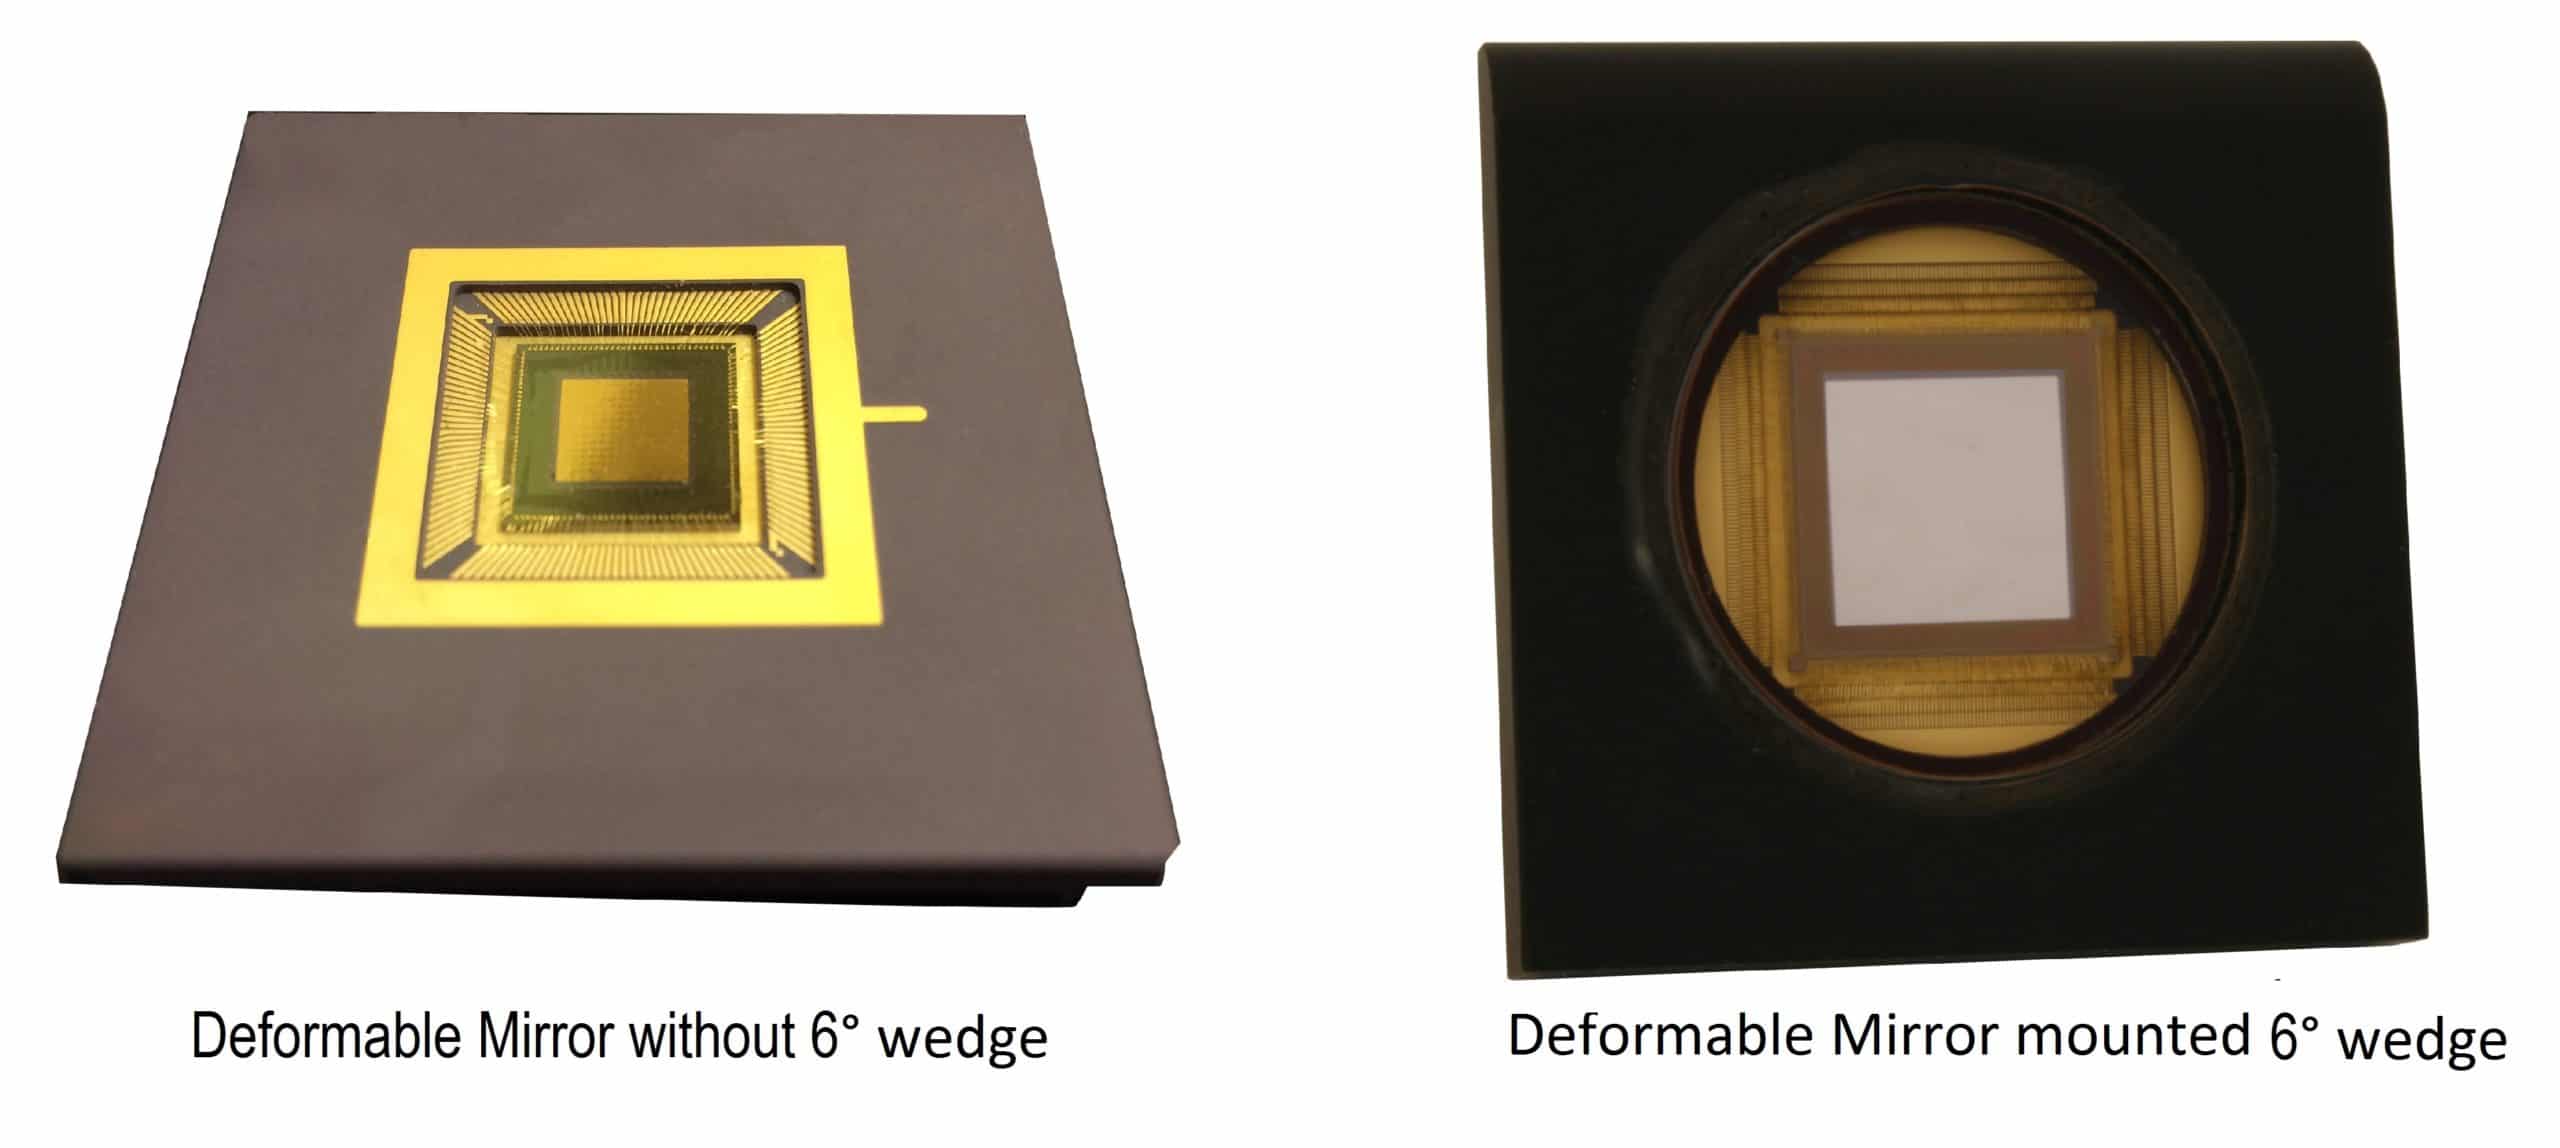 deformable mirrors, BMC,adaptive optics